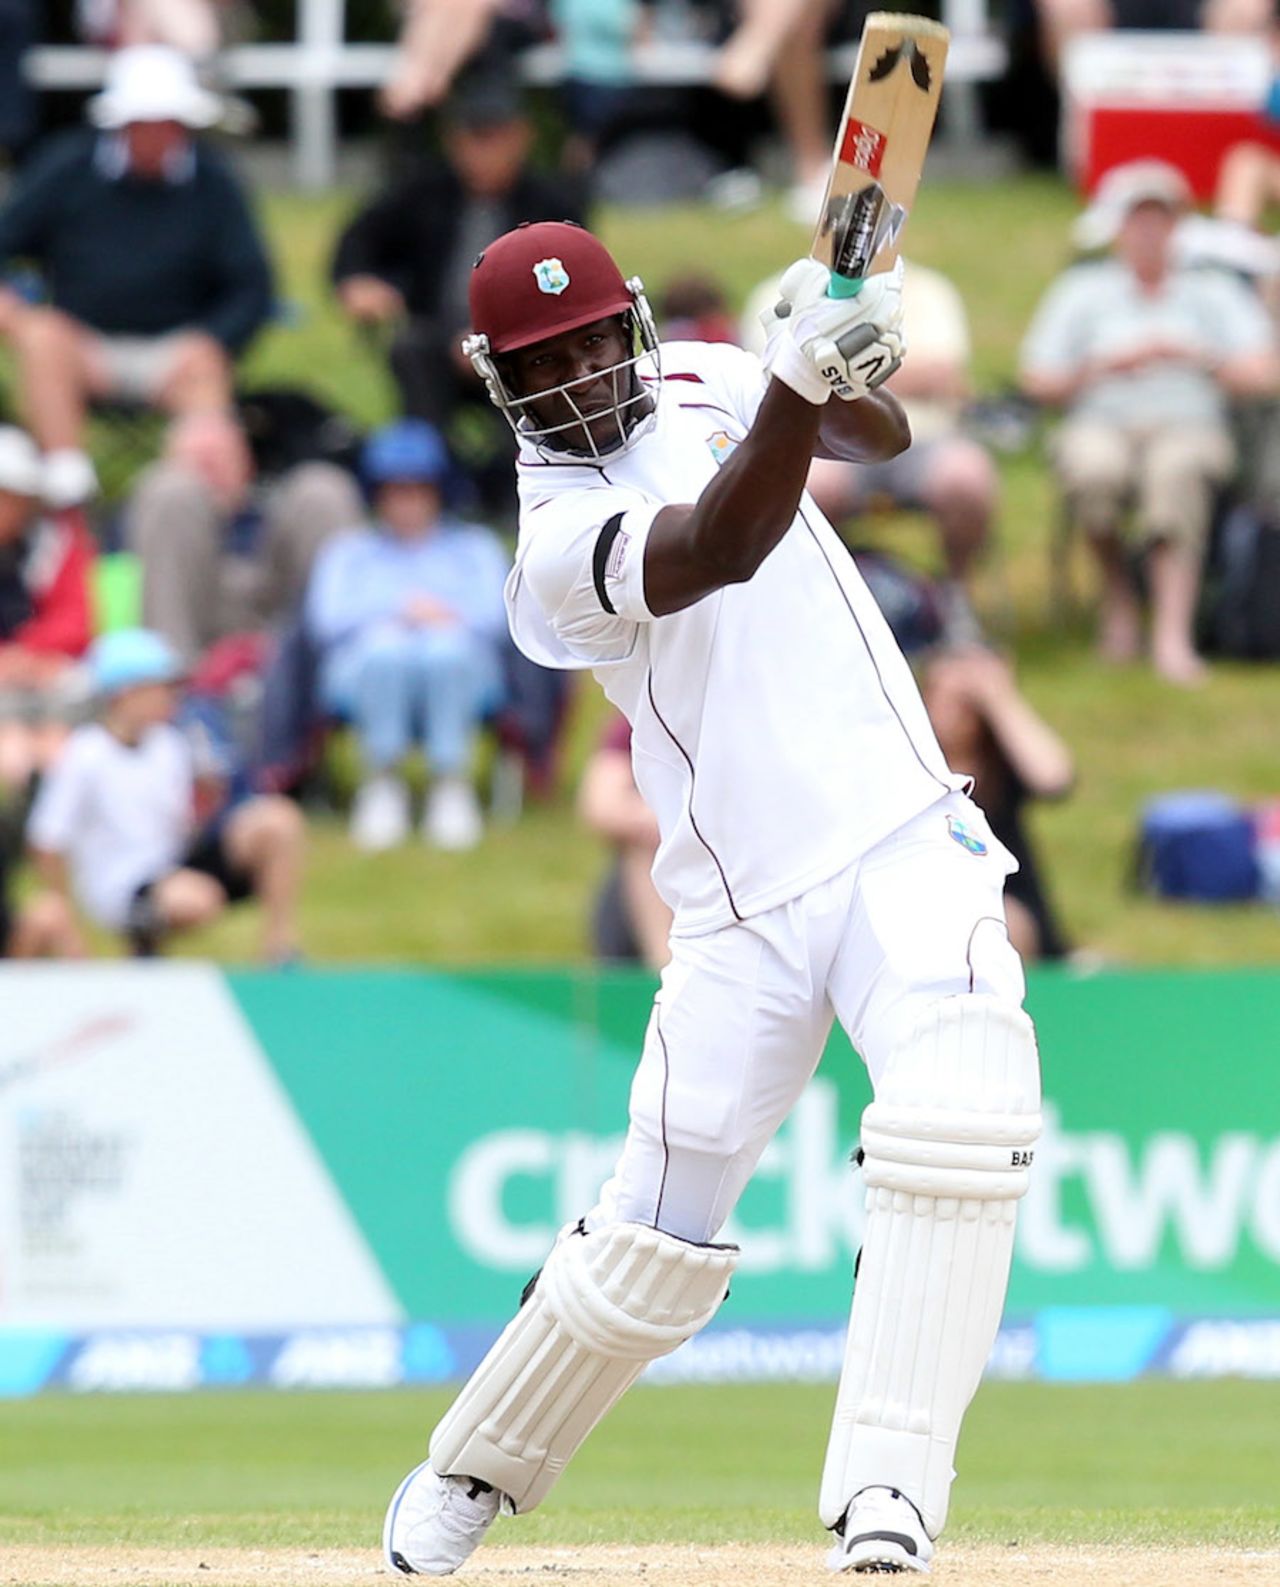 Darren Sammy hits over the top, New Zealand v West Indies, 1st Test, Dunedin, 5th day, December 7, 2013